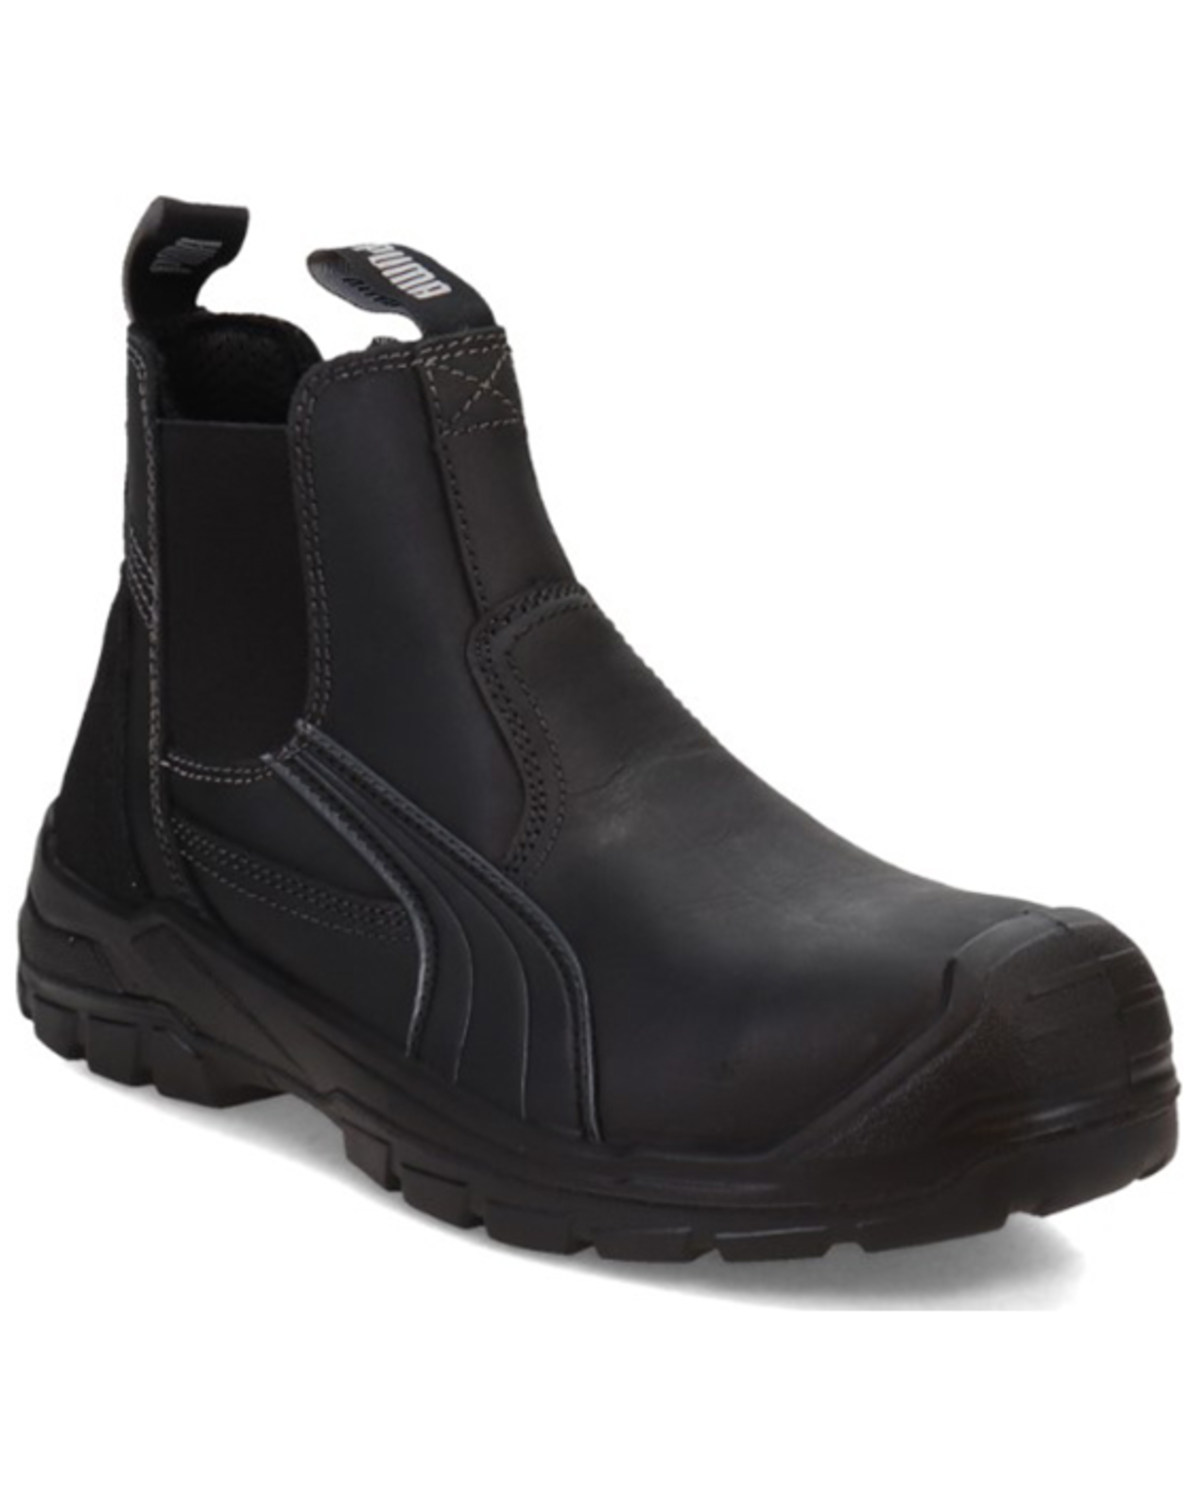 Puma Safety Men's Tanami Water Repellent Boots - Composite Toe